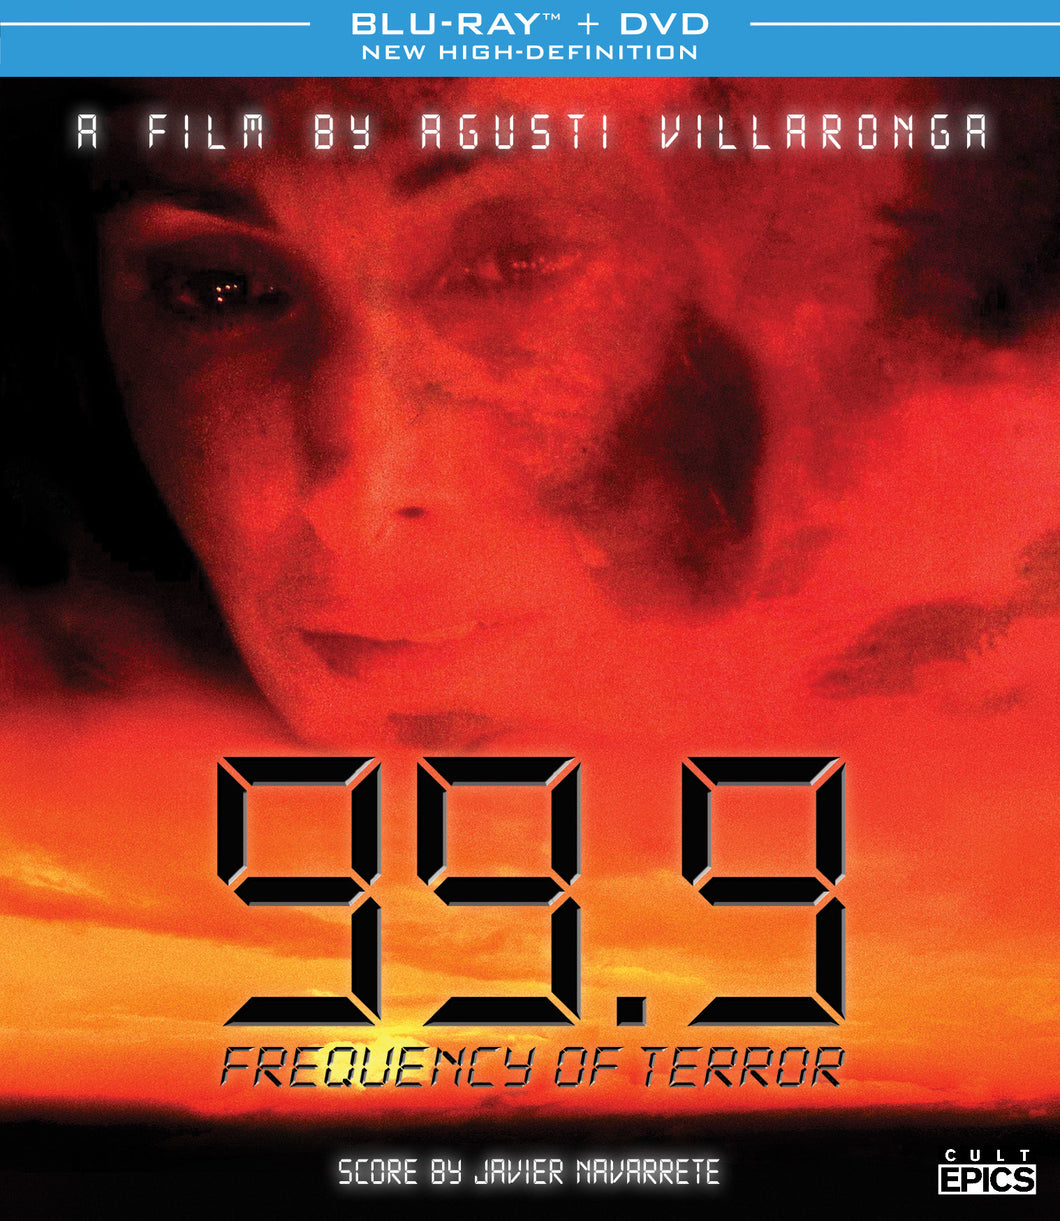 99.9 (1997) de Augusti Villaronga - front cover